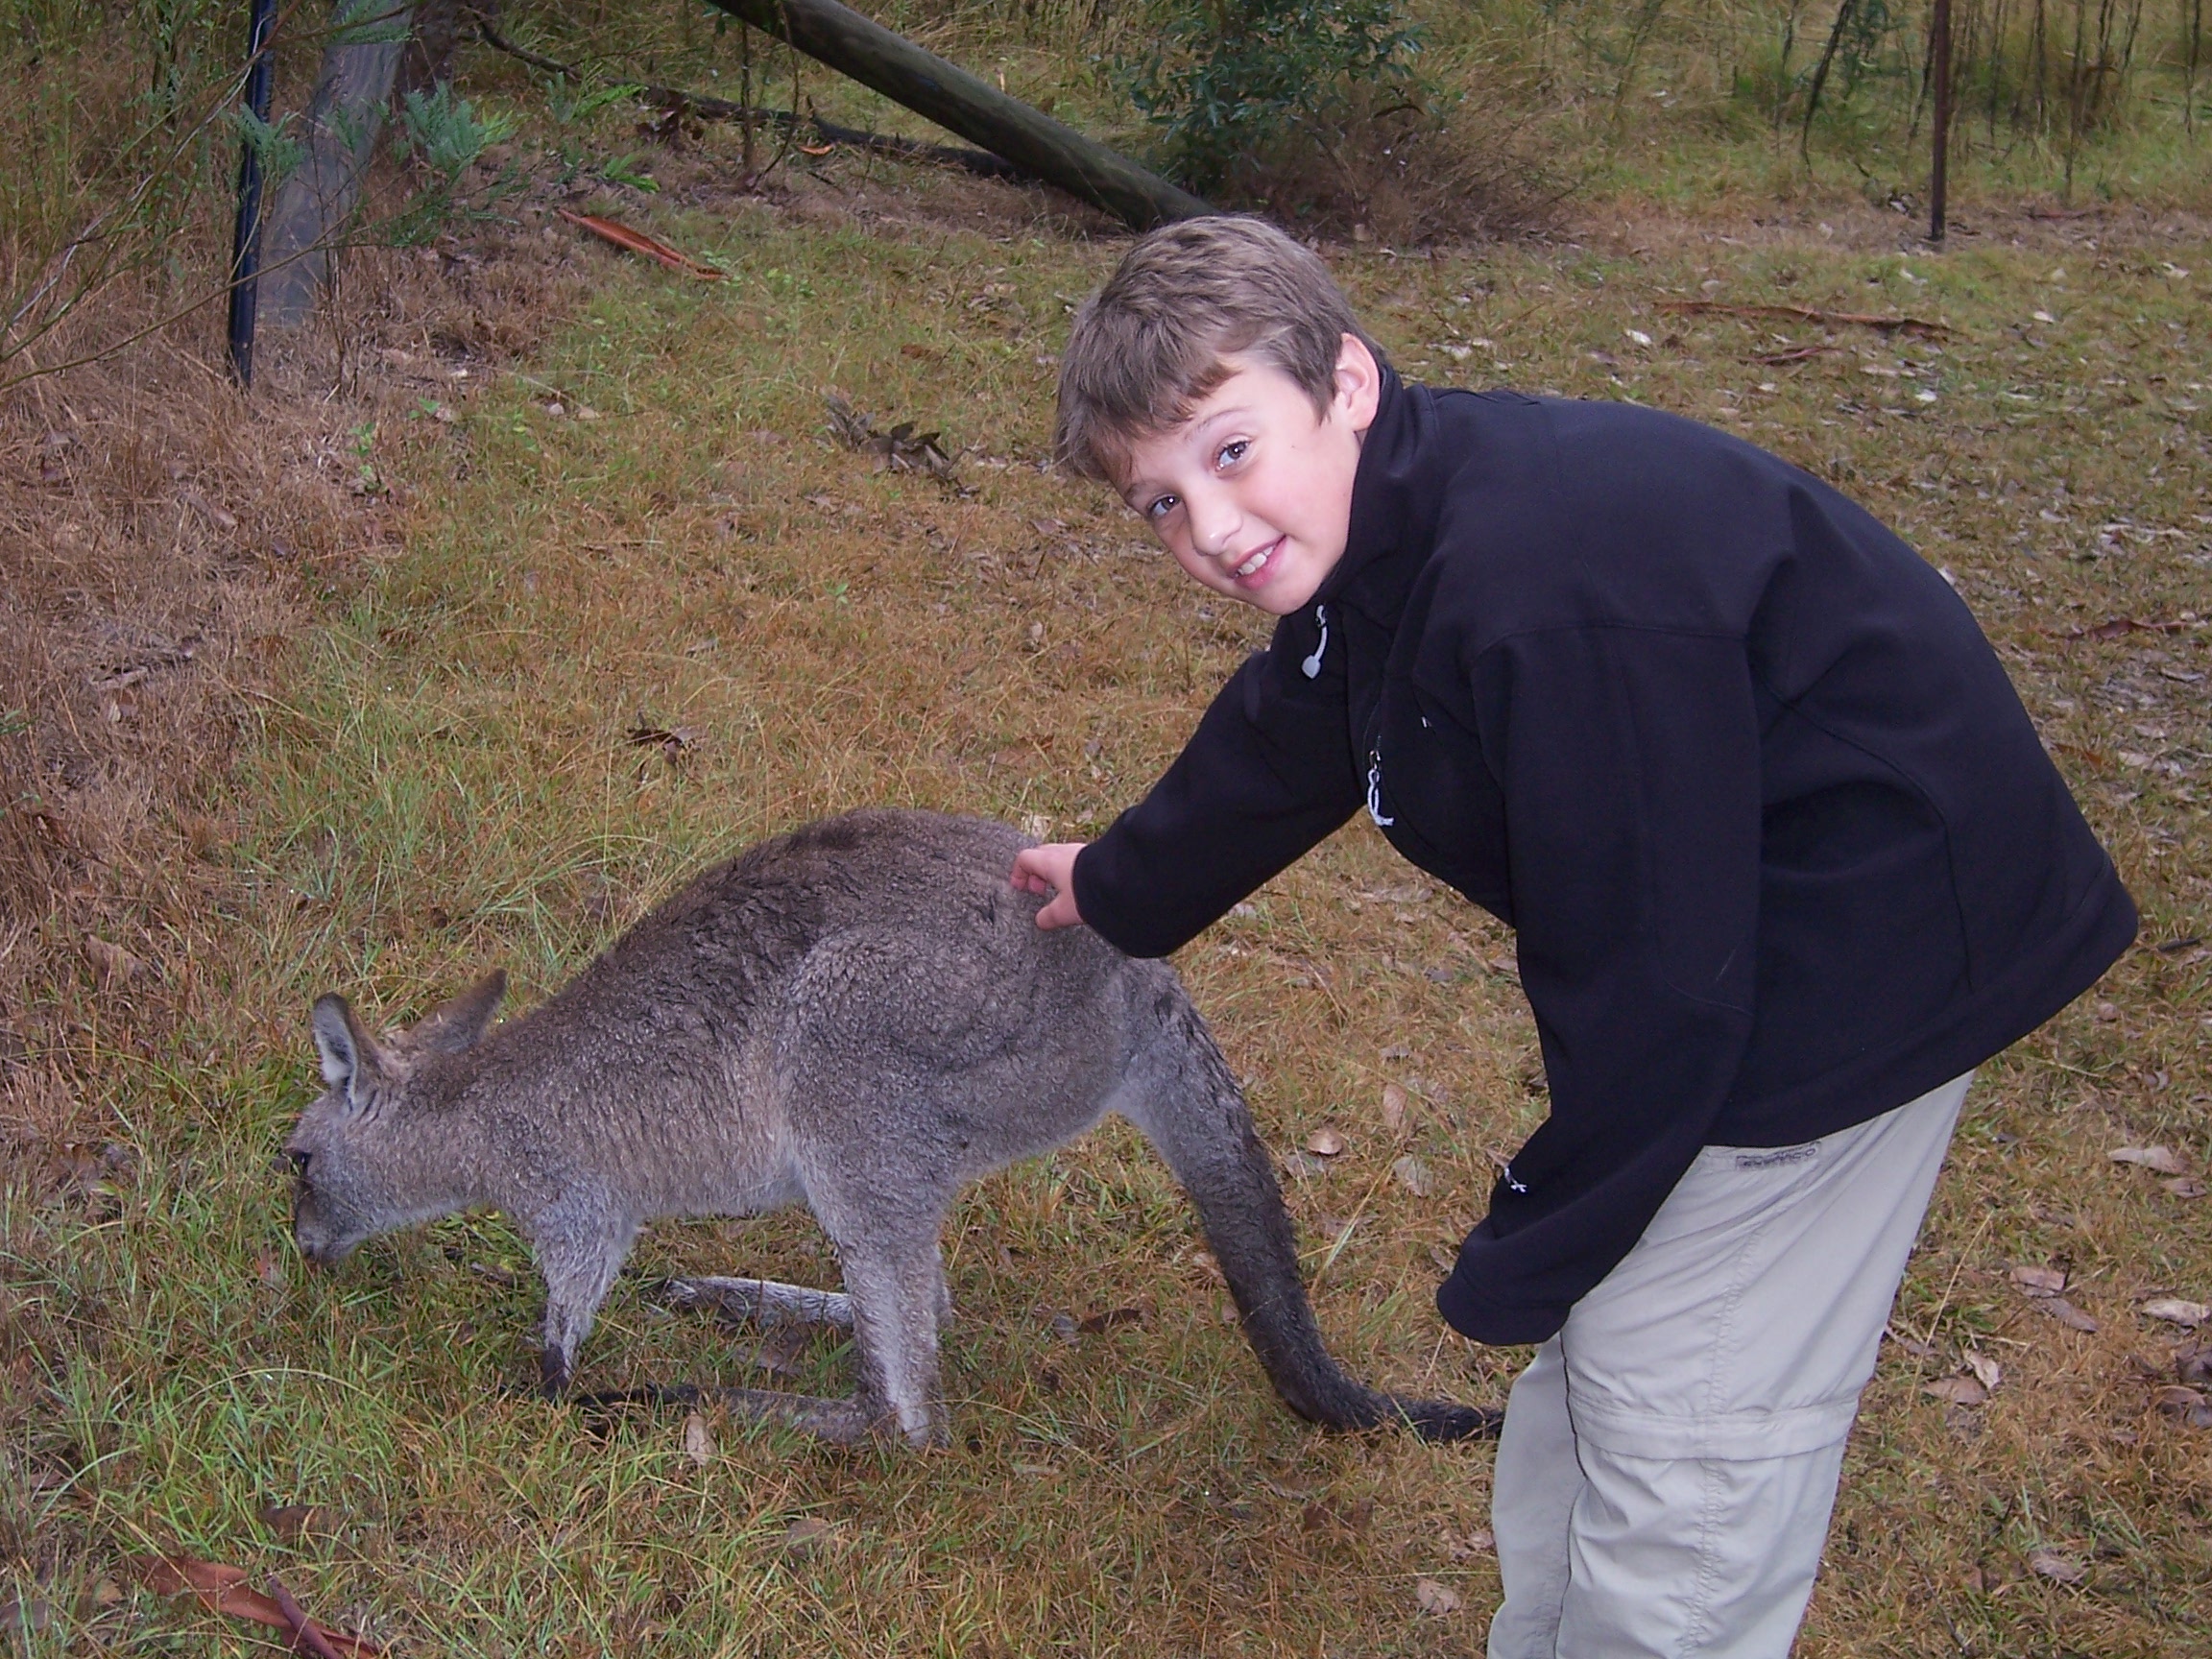 Petting a Kangaroo in Brisbane Australia.